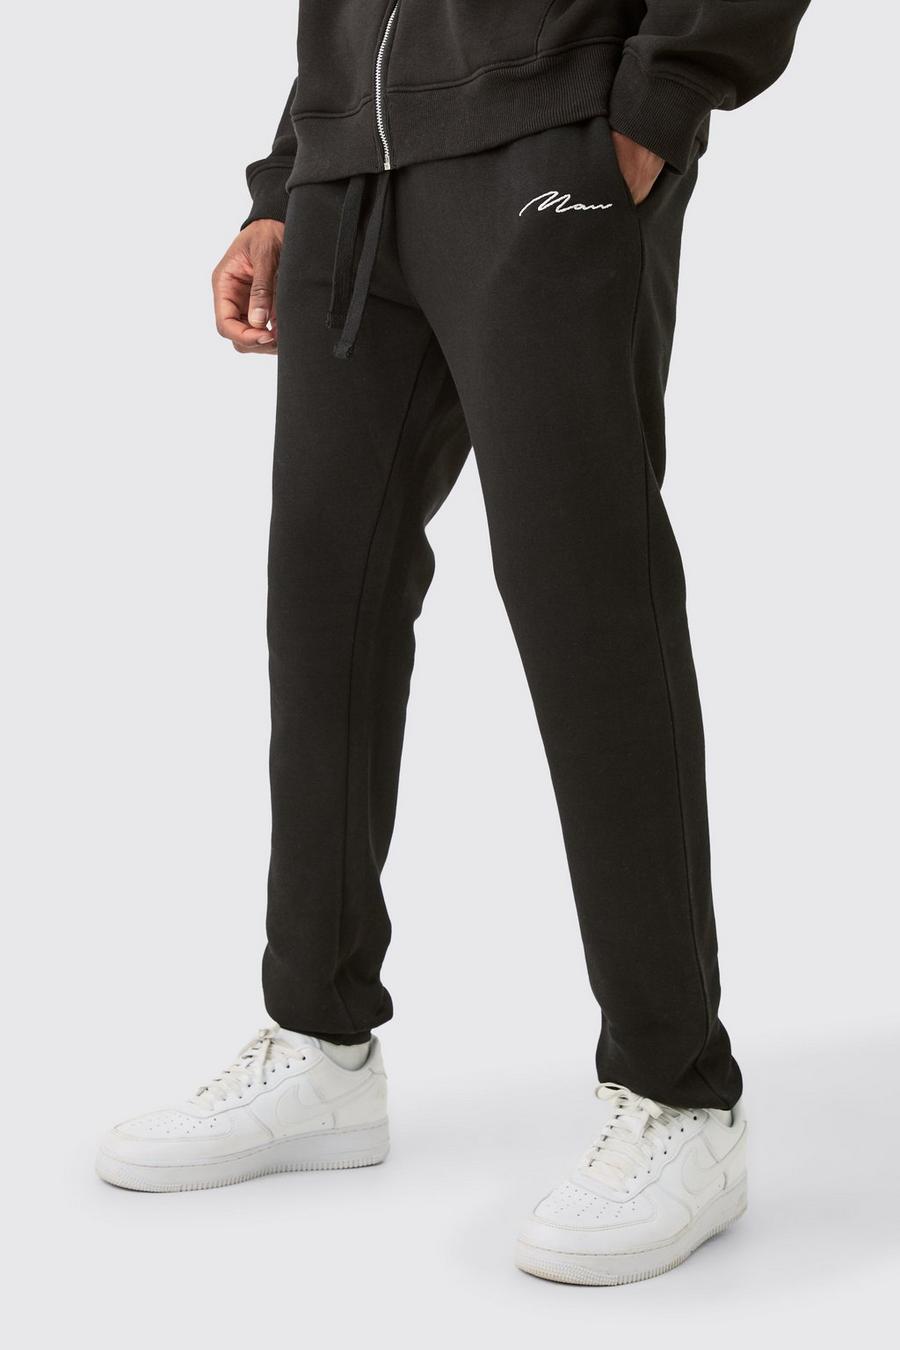 Pantalón deportivo Tall pitillo negro con firma MAN, Black image number 1